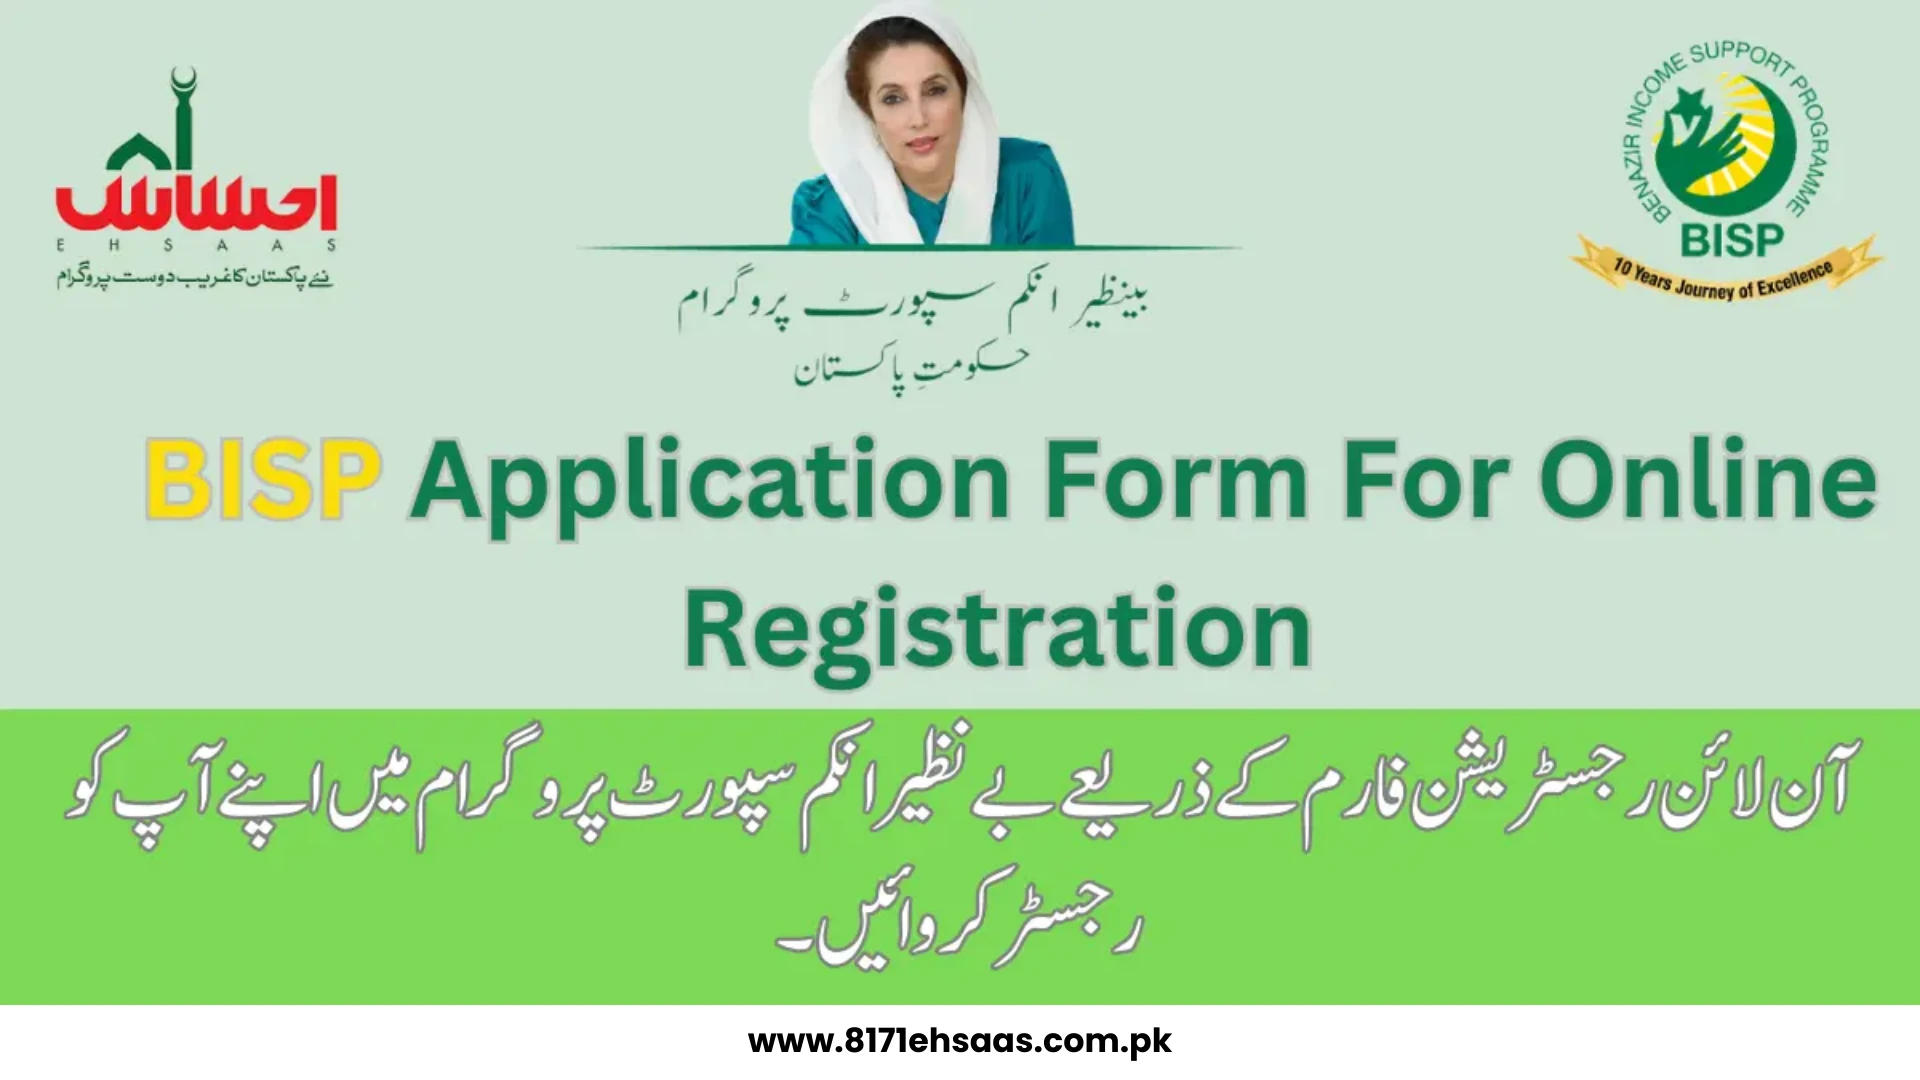 Registration for Benazir Income Support Program